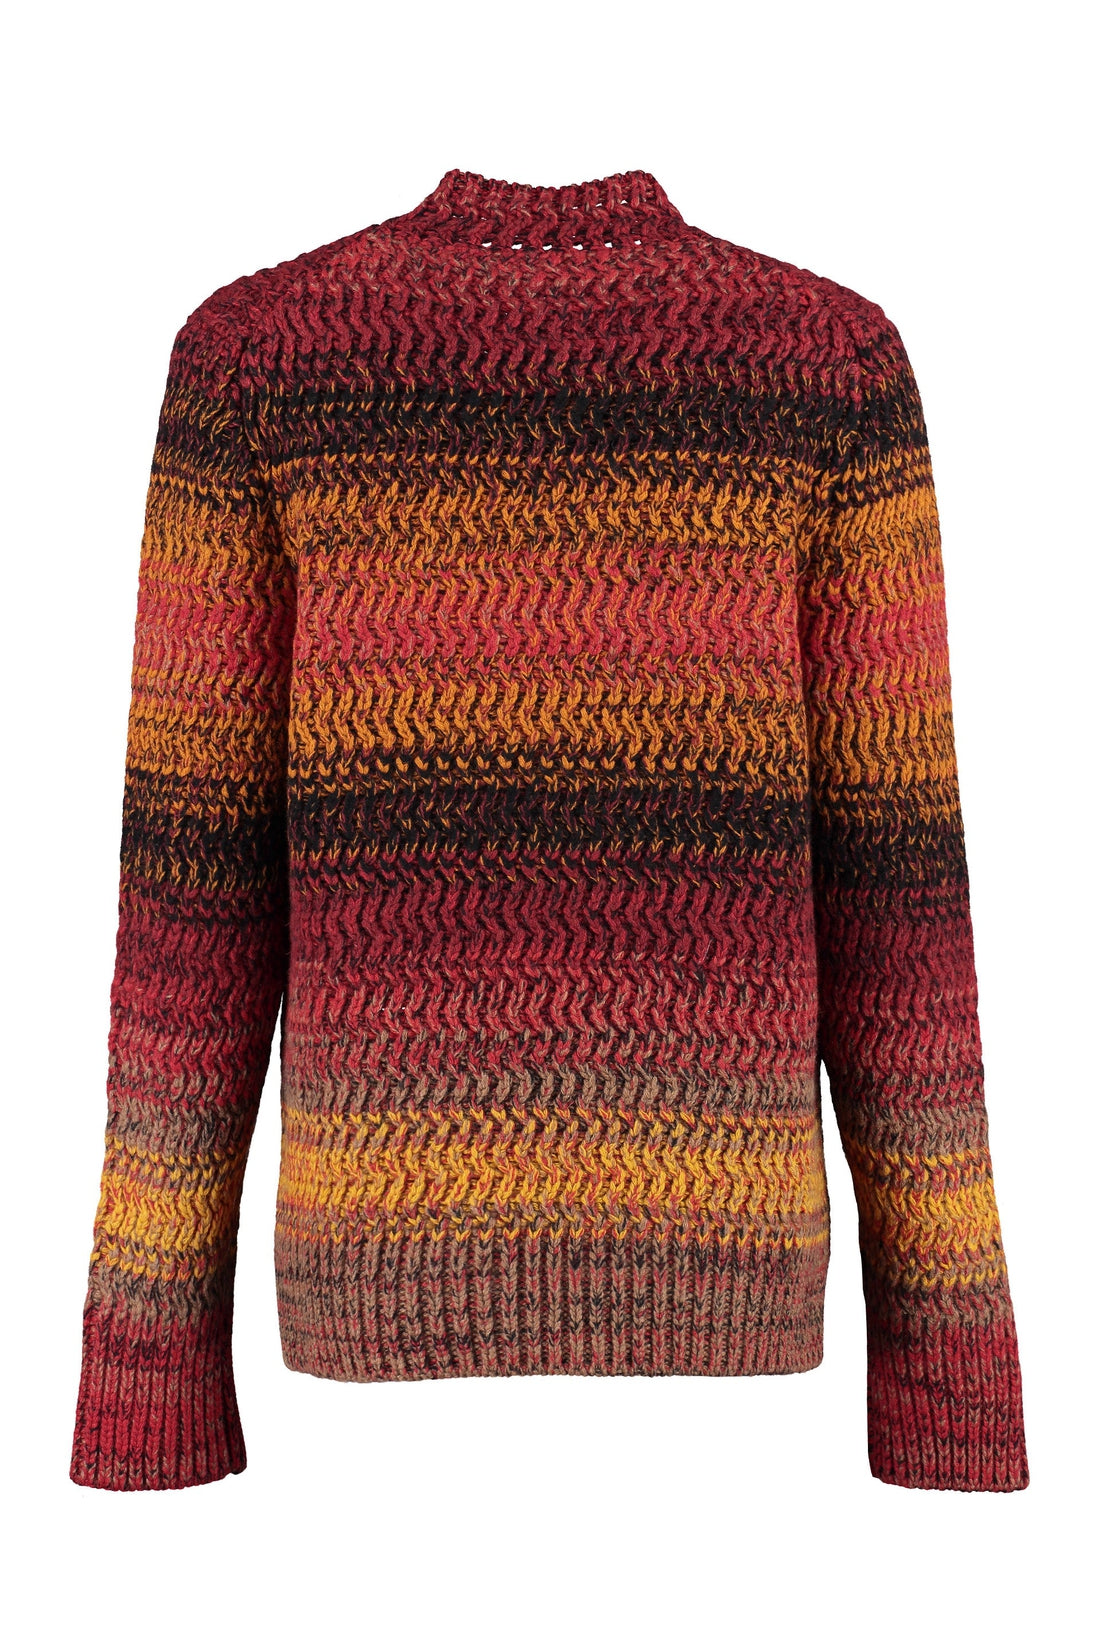 Chloé-OUTLET-SALE-Crew-neck wool sweater-ARCHIVIST